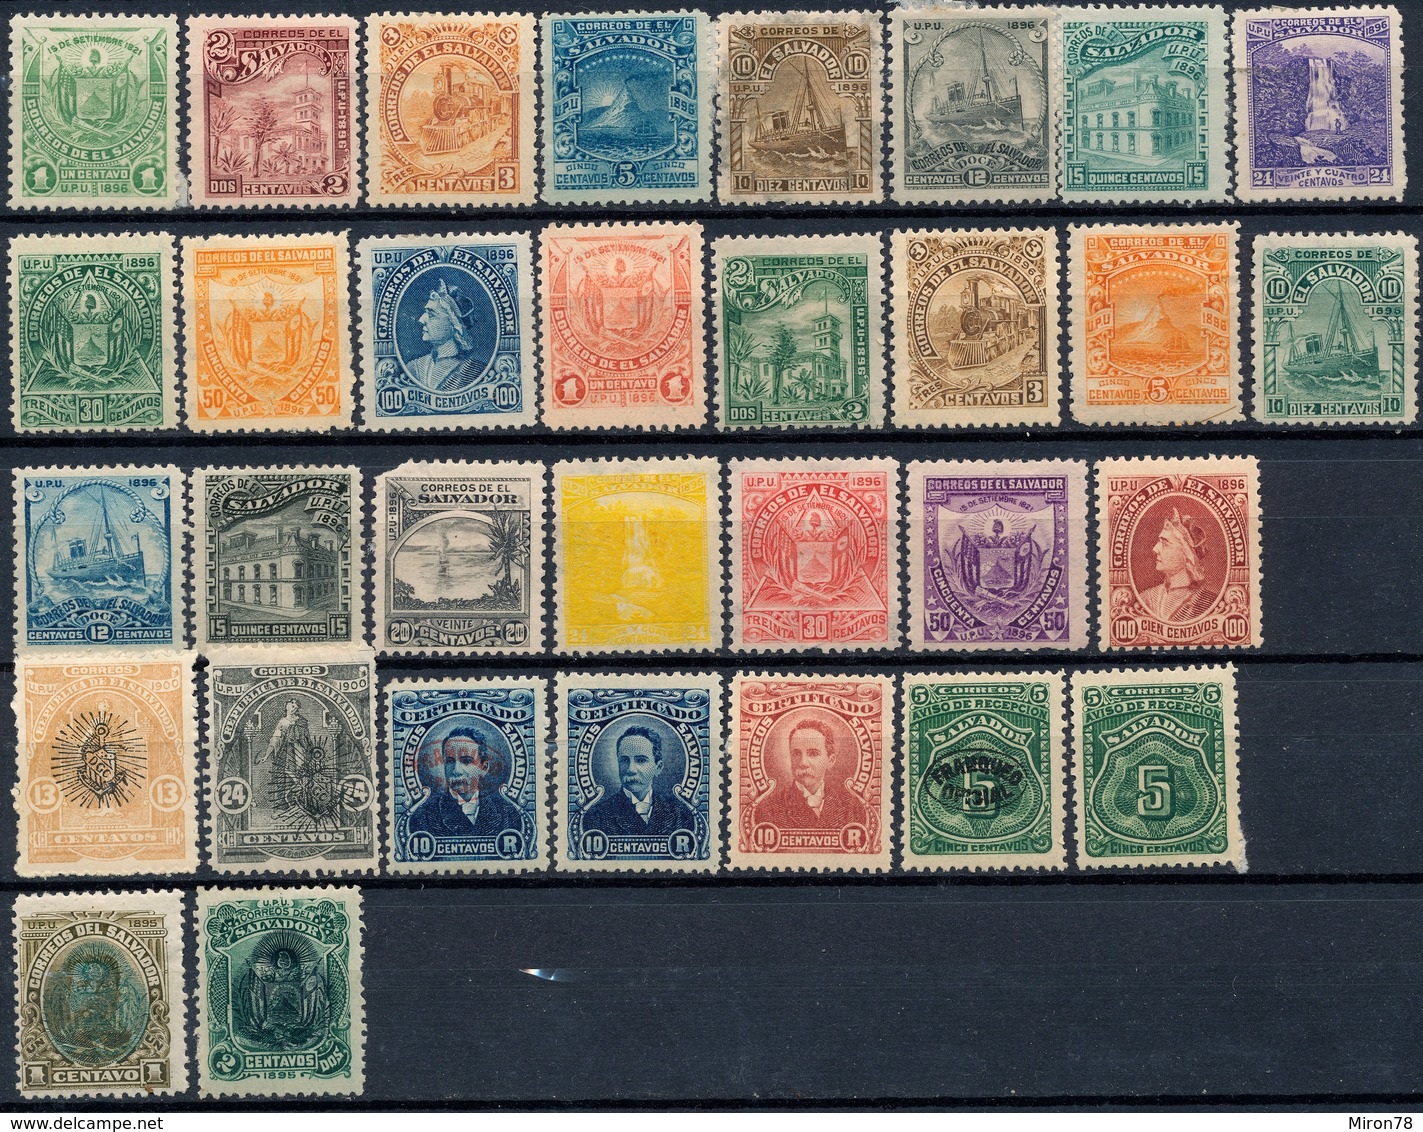 Stamps Salvador Mint - Salvador